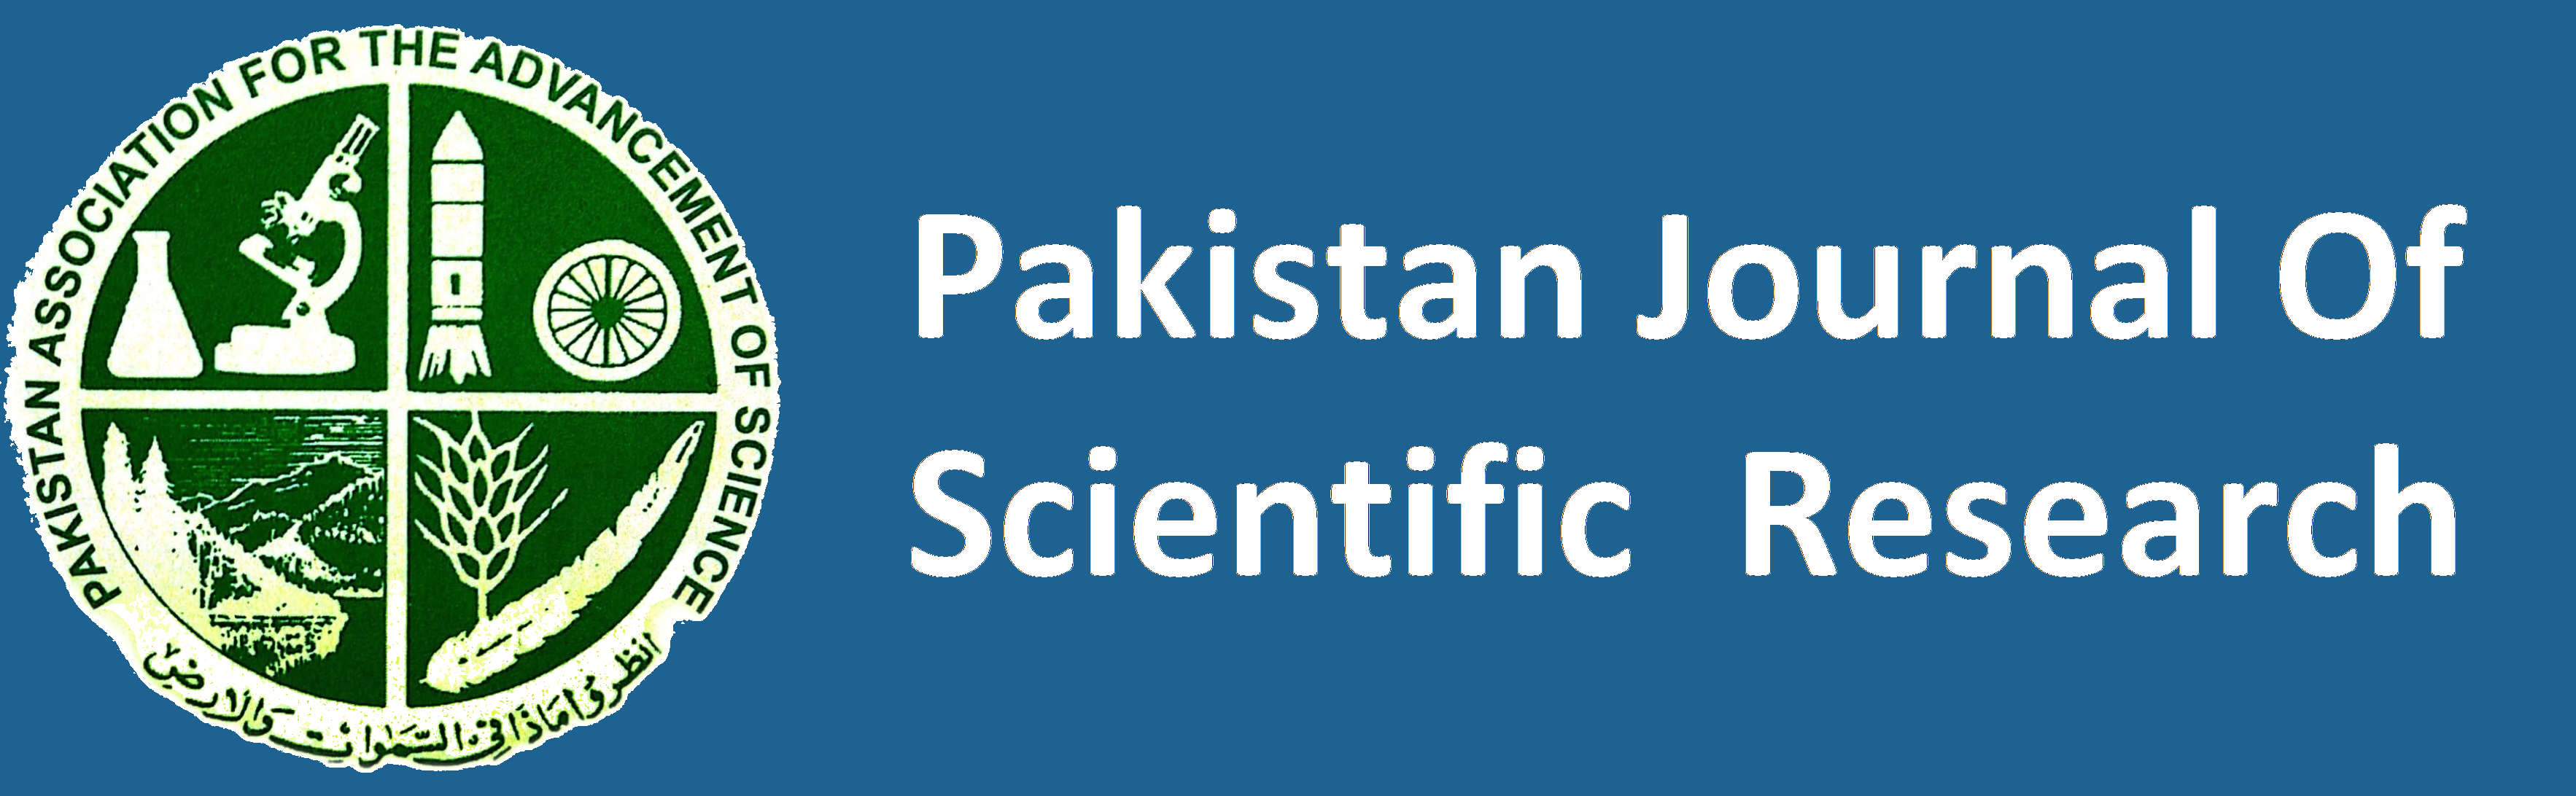 					View Vol. 1 No. 1 (2021): Pakistan Journal of Scientific Research
				